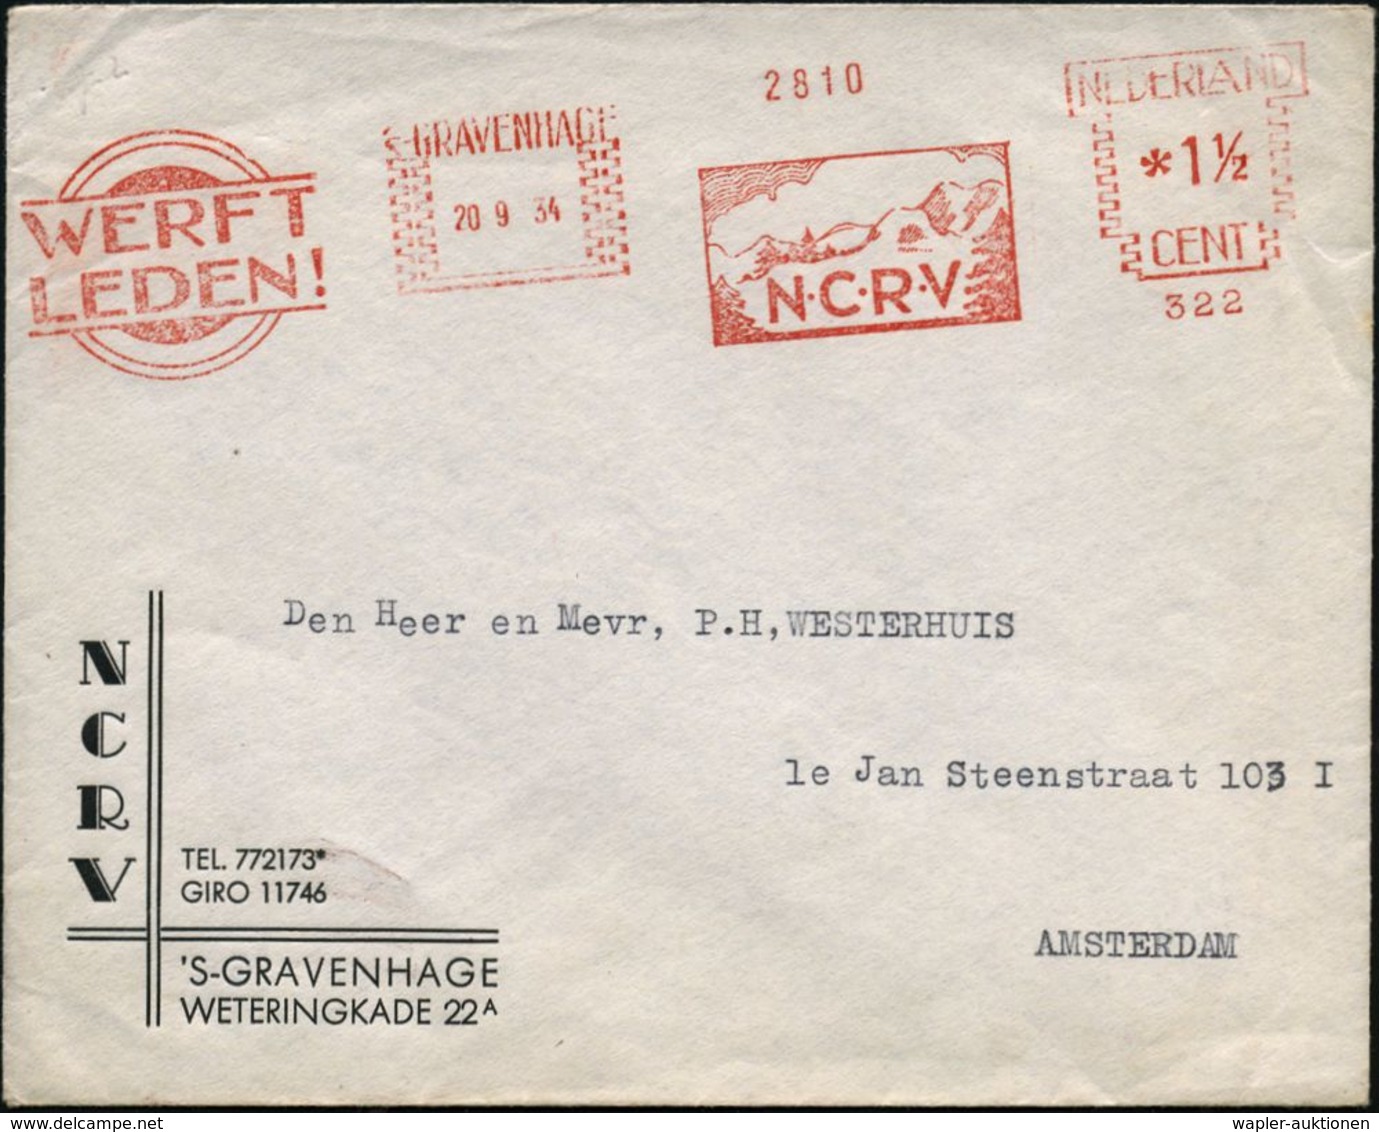 NIEDERLANDE 1934 (20.9.) AFS.: 's-GRAVENHAGE/322/N-C-R-V/WERFT/LEDEN! (Berglandschaft M.Tannen) Dienst-Bf.: N C R V = Ni - Non Classés